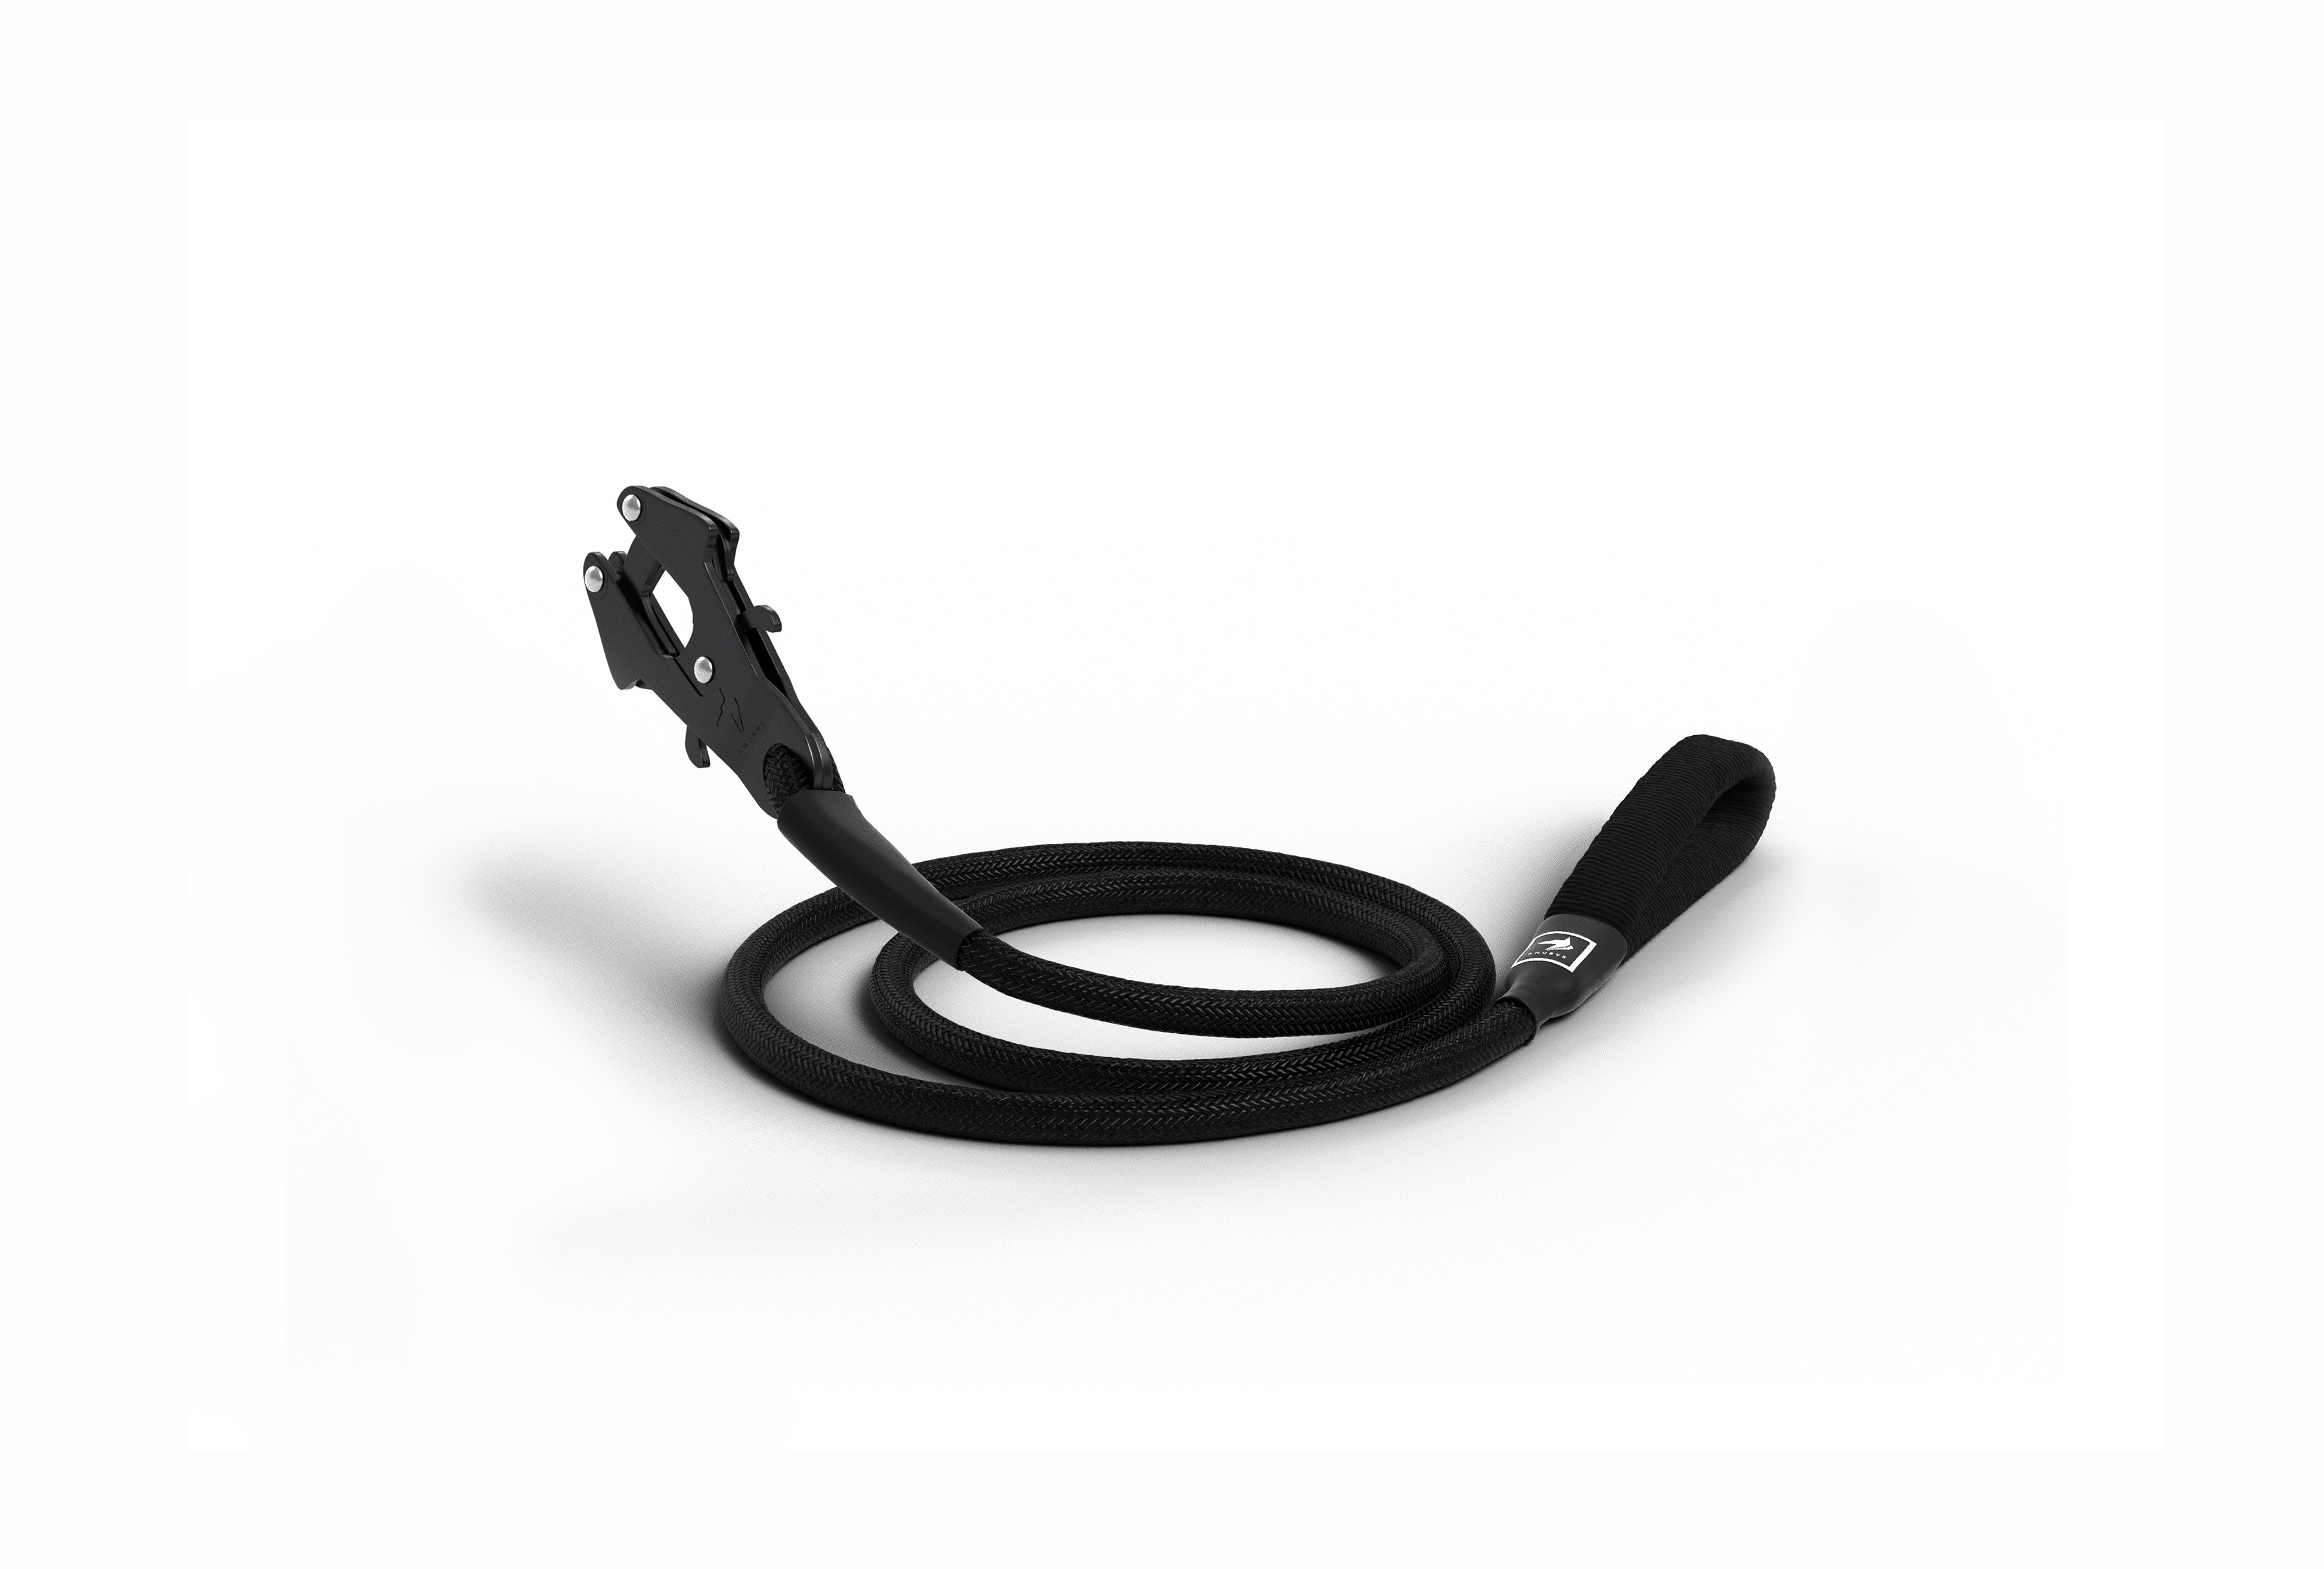 Rope Leash | Military Grade | Black - Anubys - Black - -